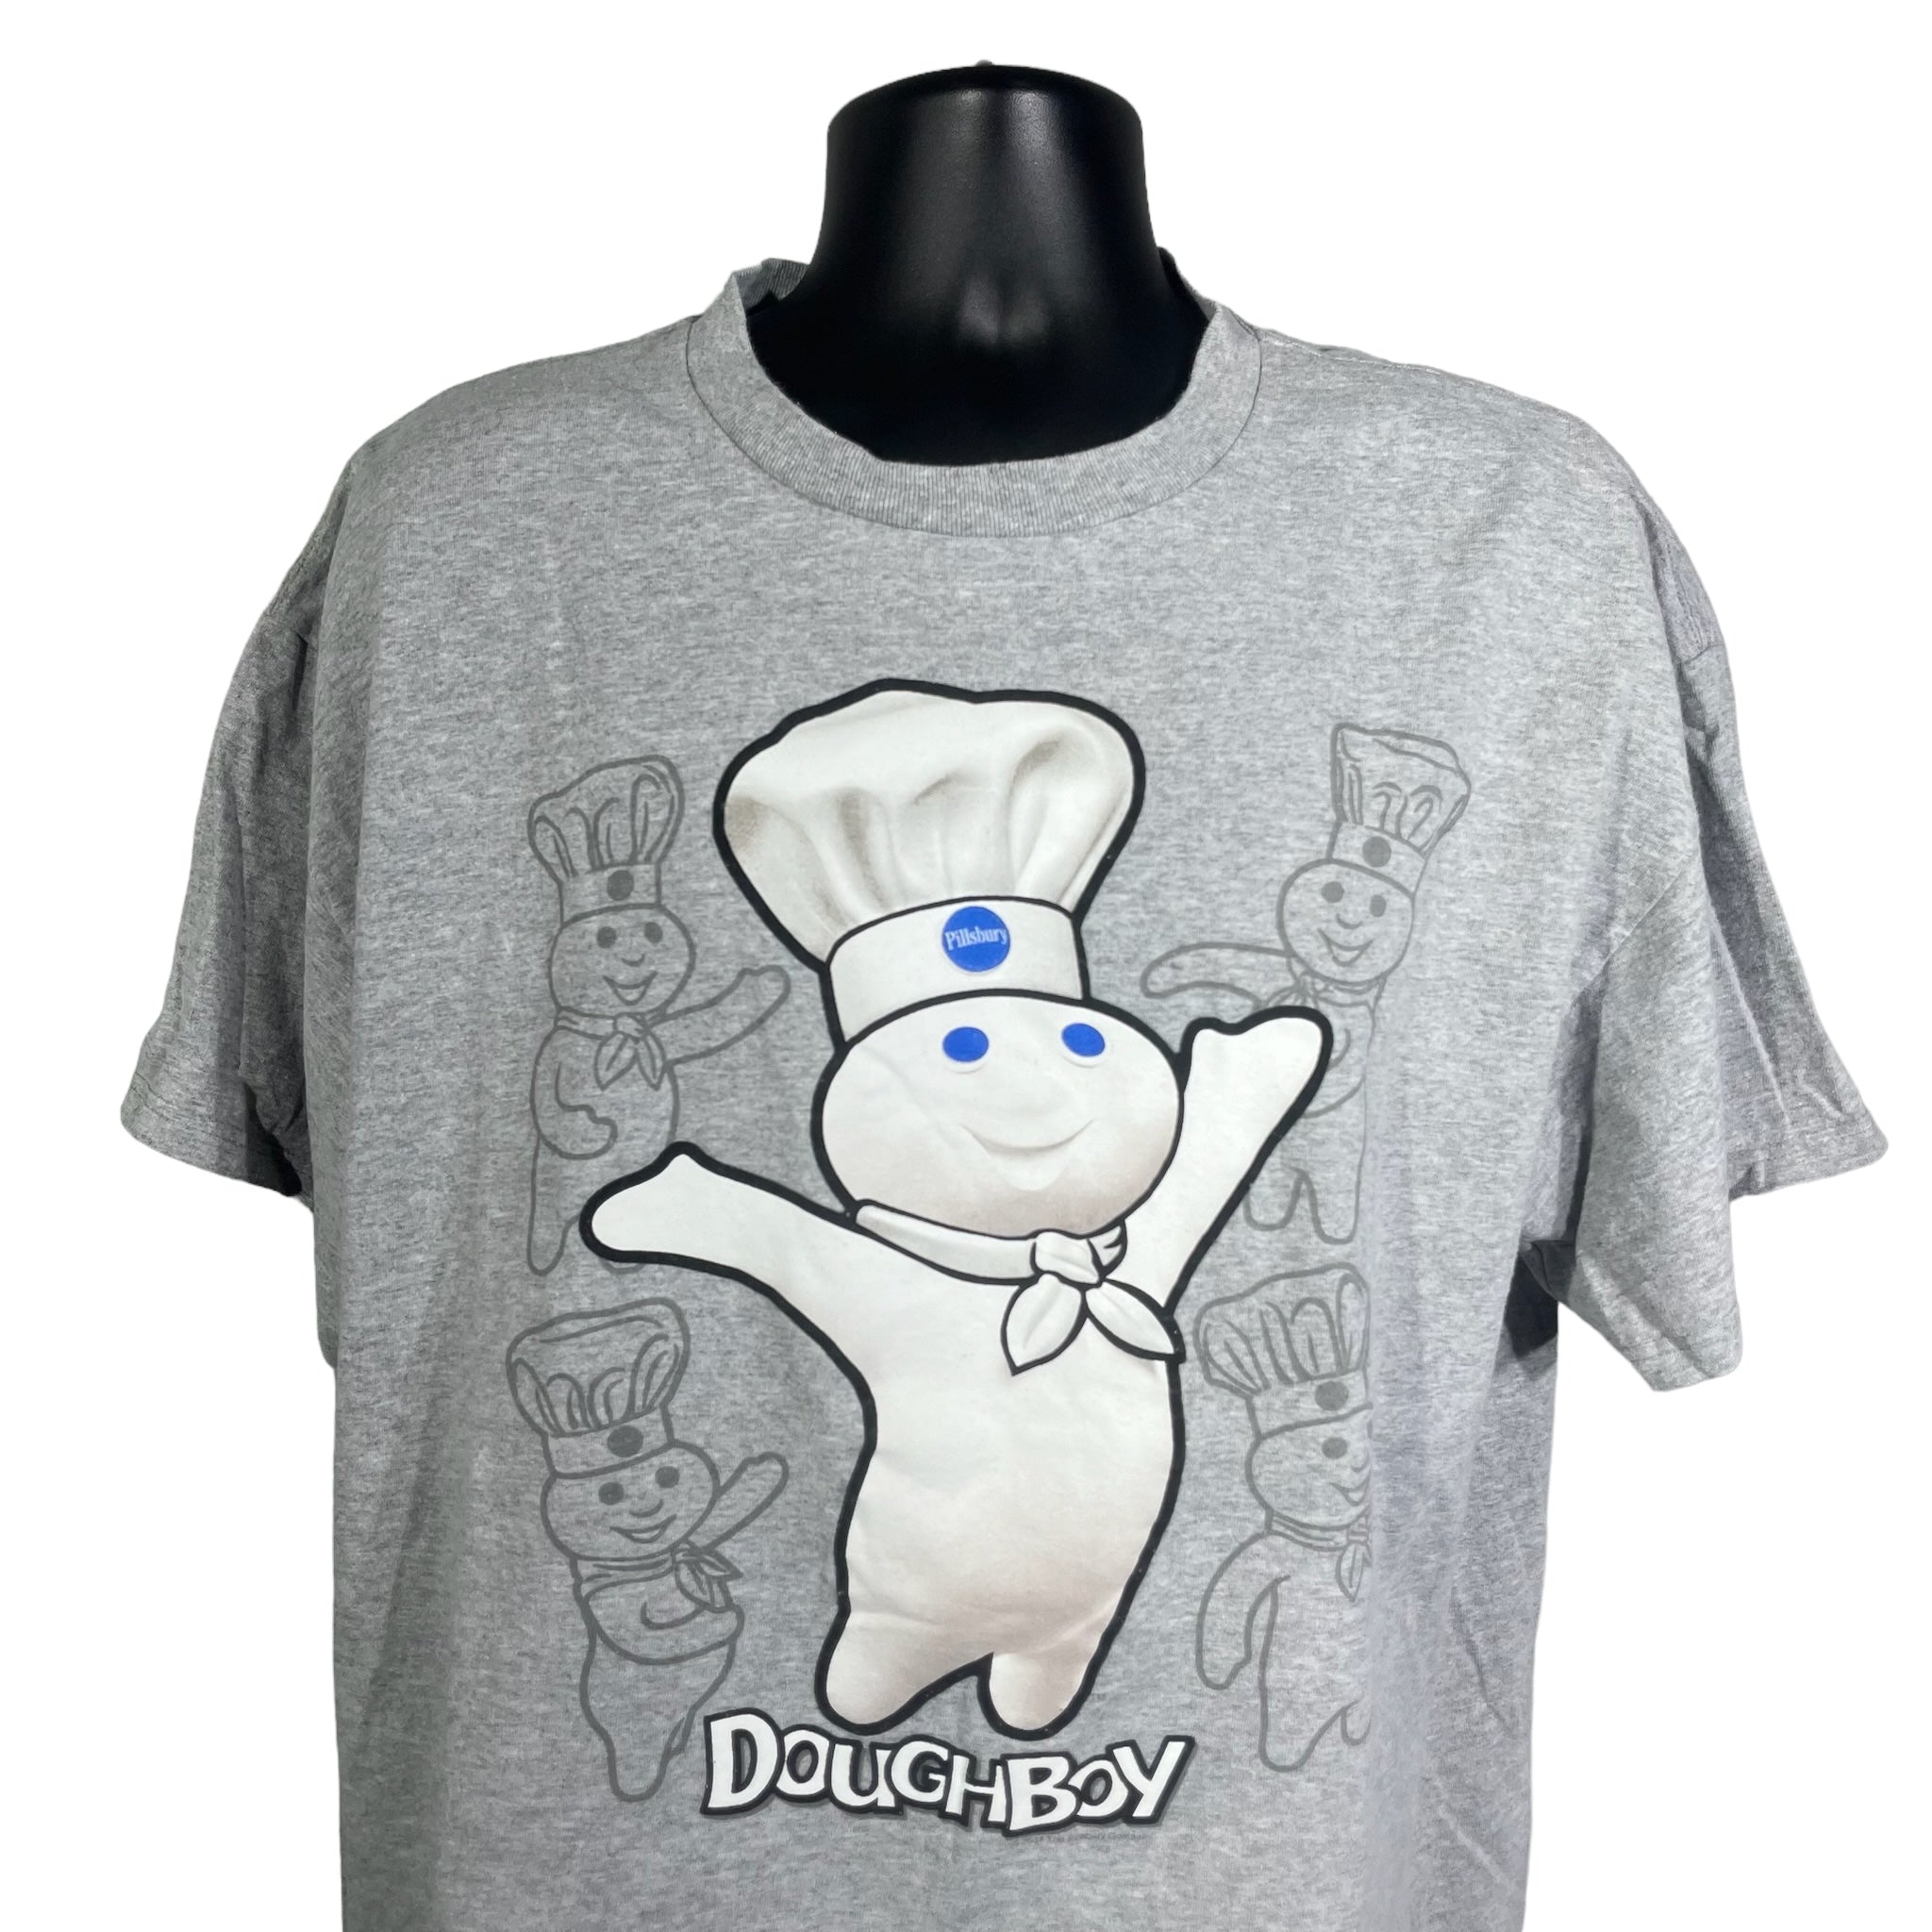 Vintage Pillsbury Doughboy Humor Tee 2000s